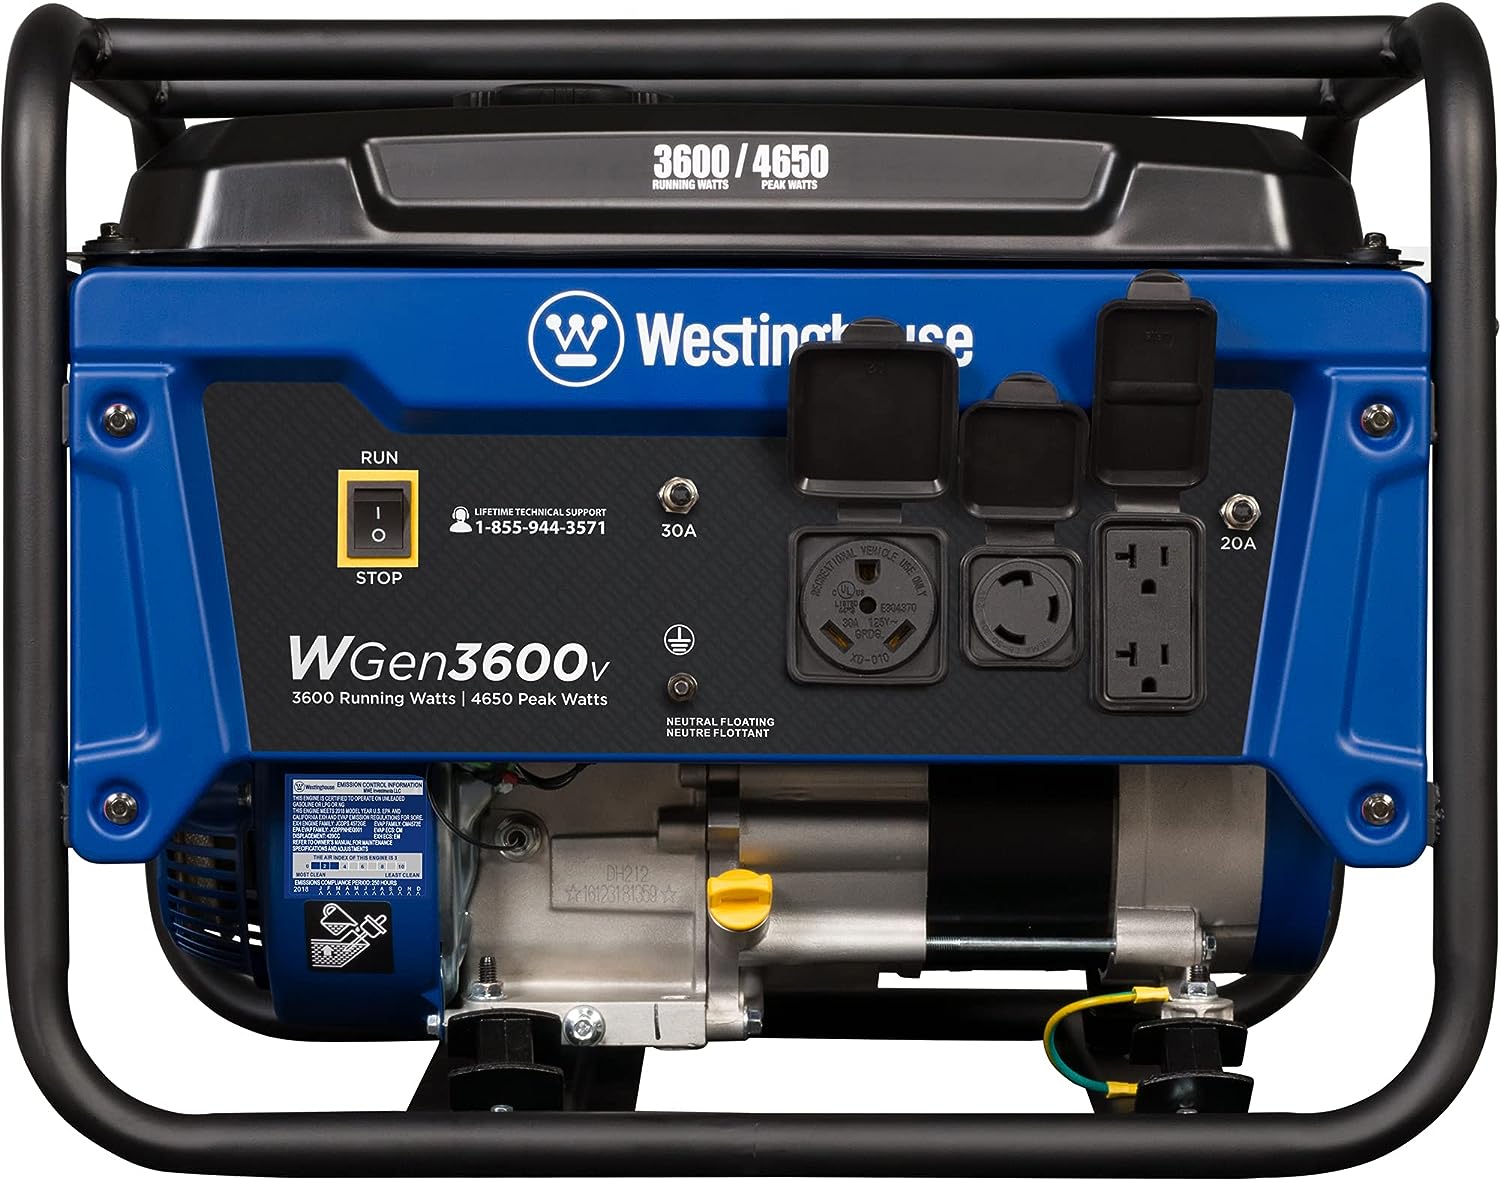 Westinghouse WGen3600v Generator 3600W/4650W 30 Amp Recoil Start Gas New